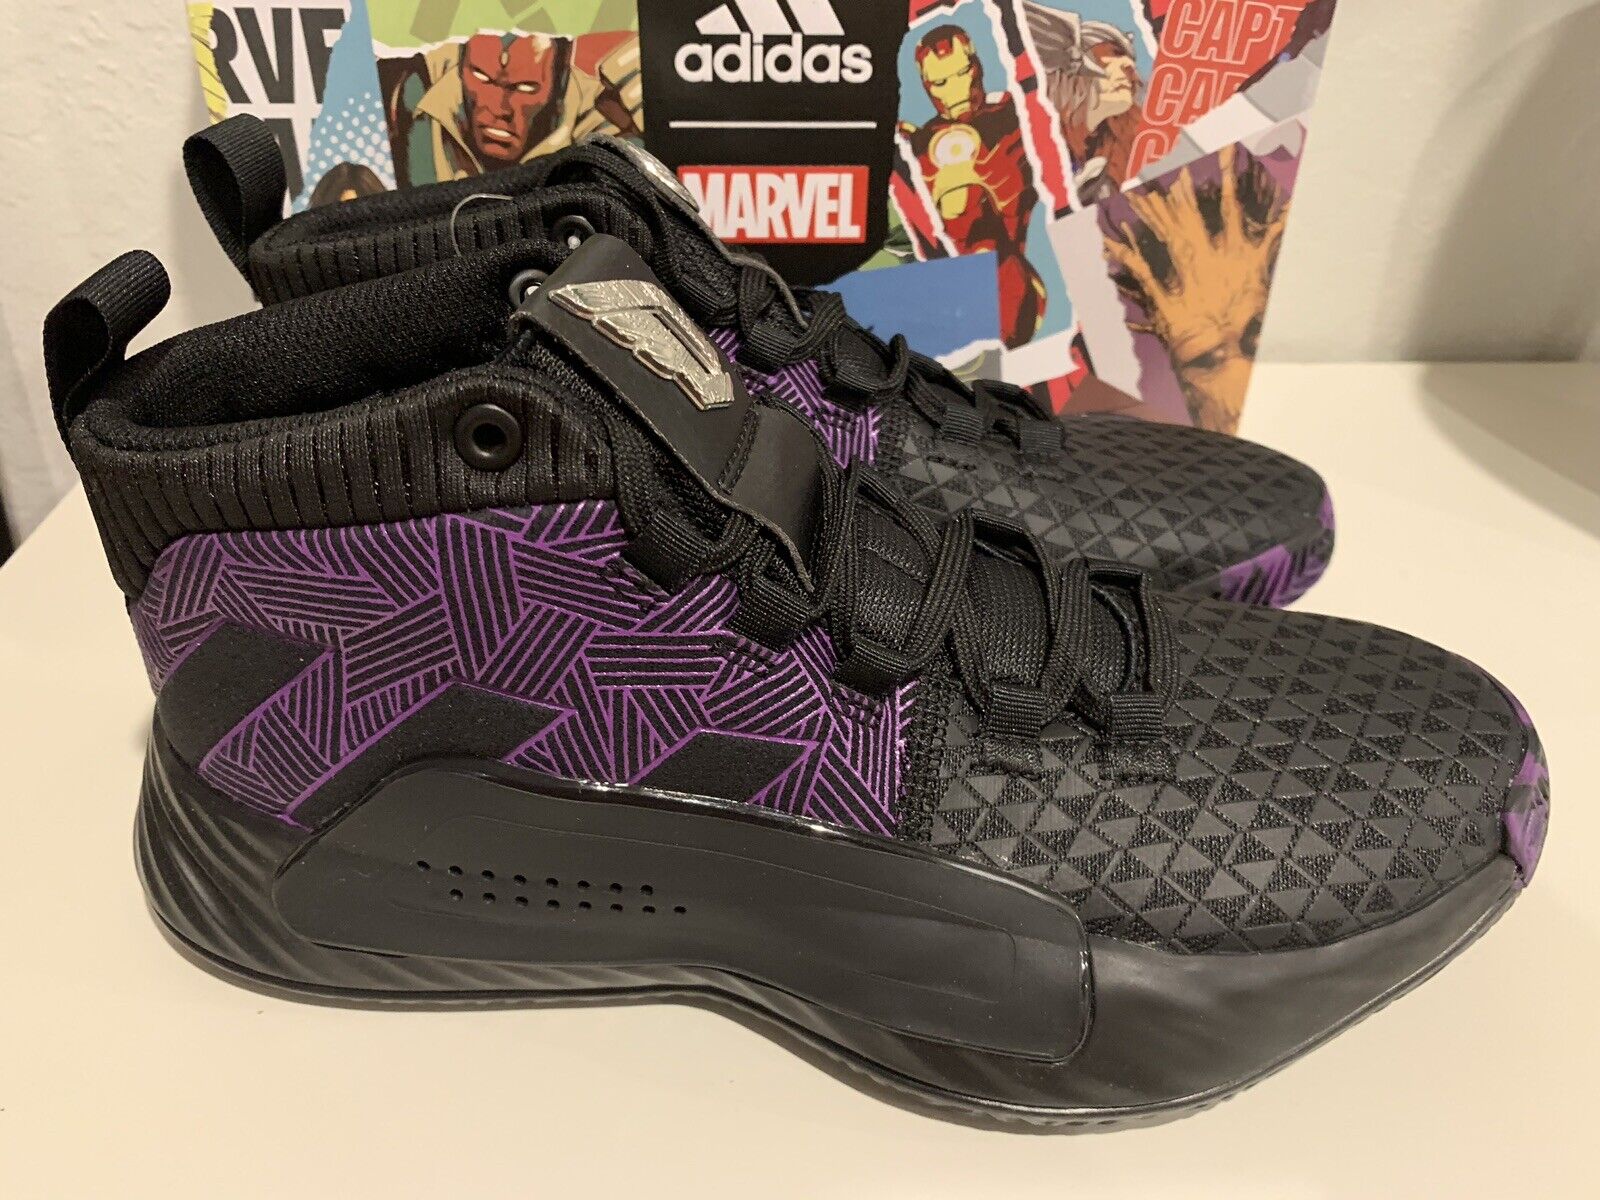 Adidas Dame 5 J Marvel Black Panther EG2627 Size 4.5y Basketball Shoes New Black